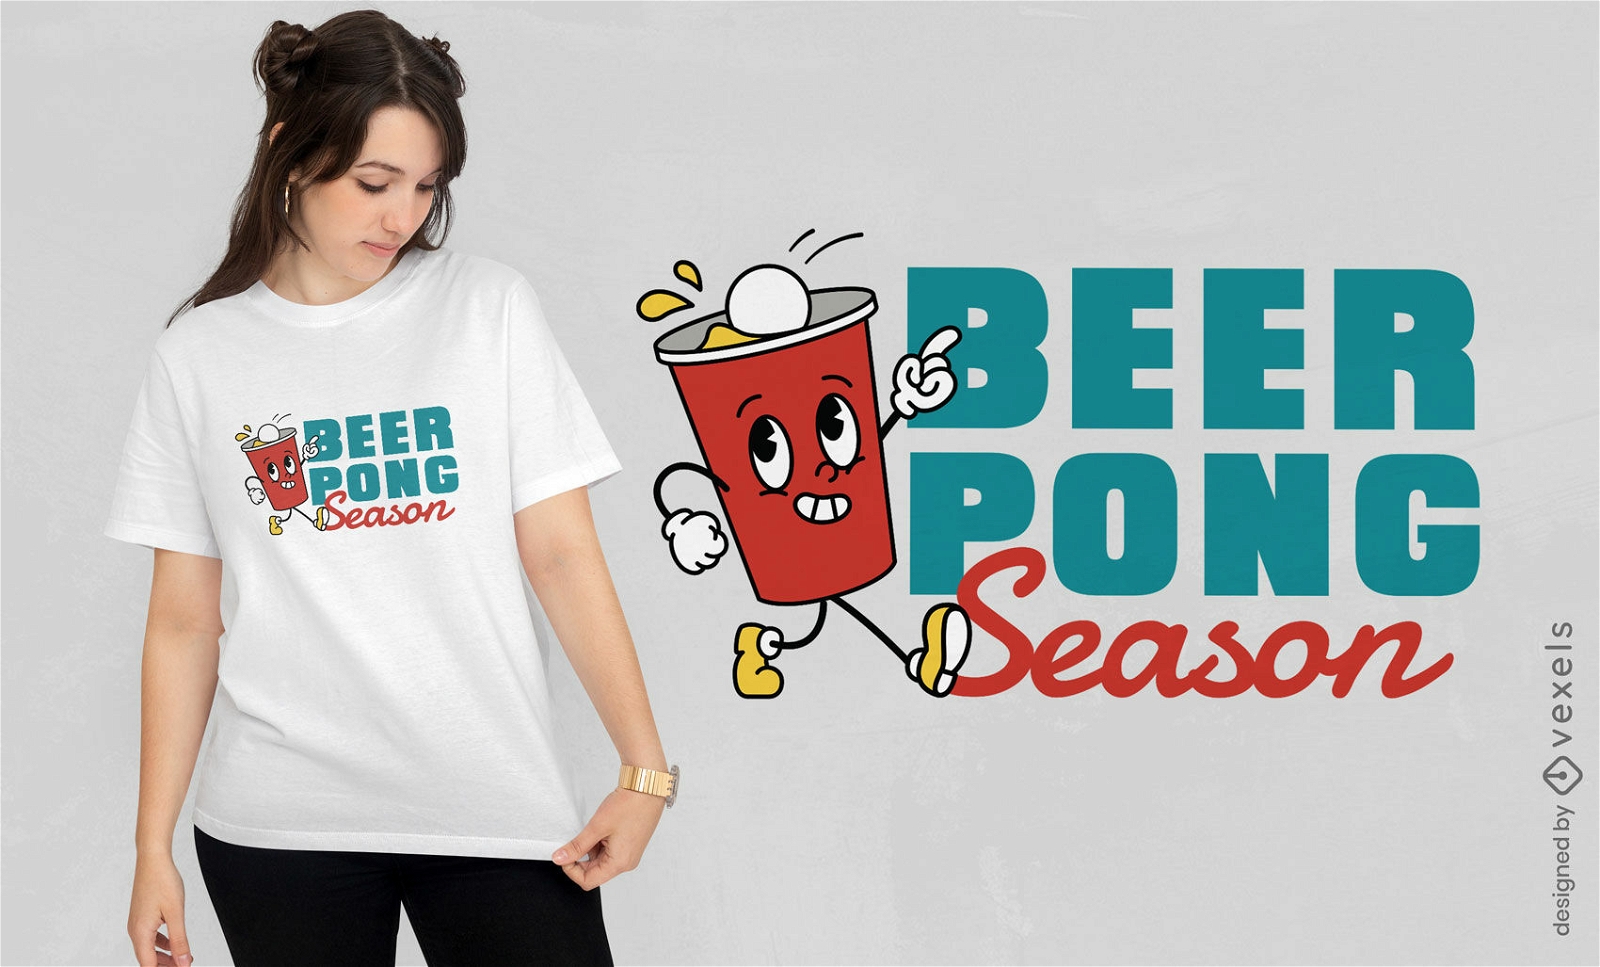 Beer pong season fun t-shirt design